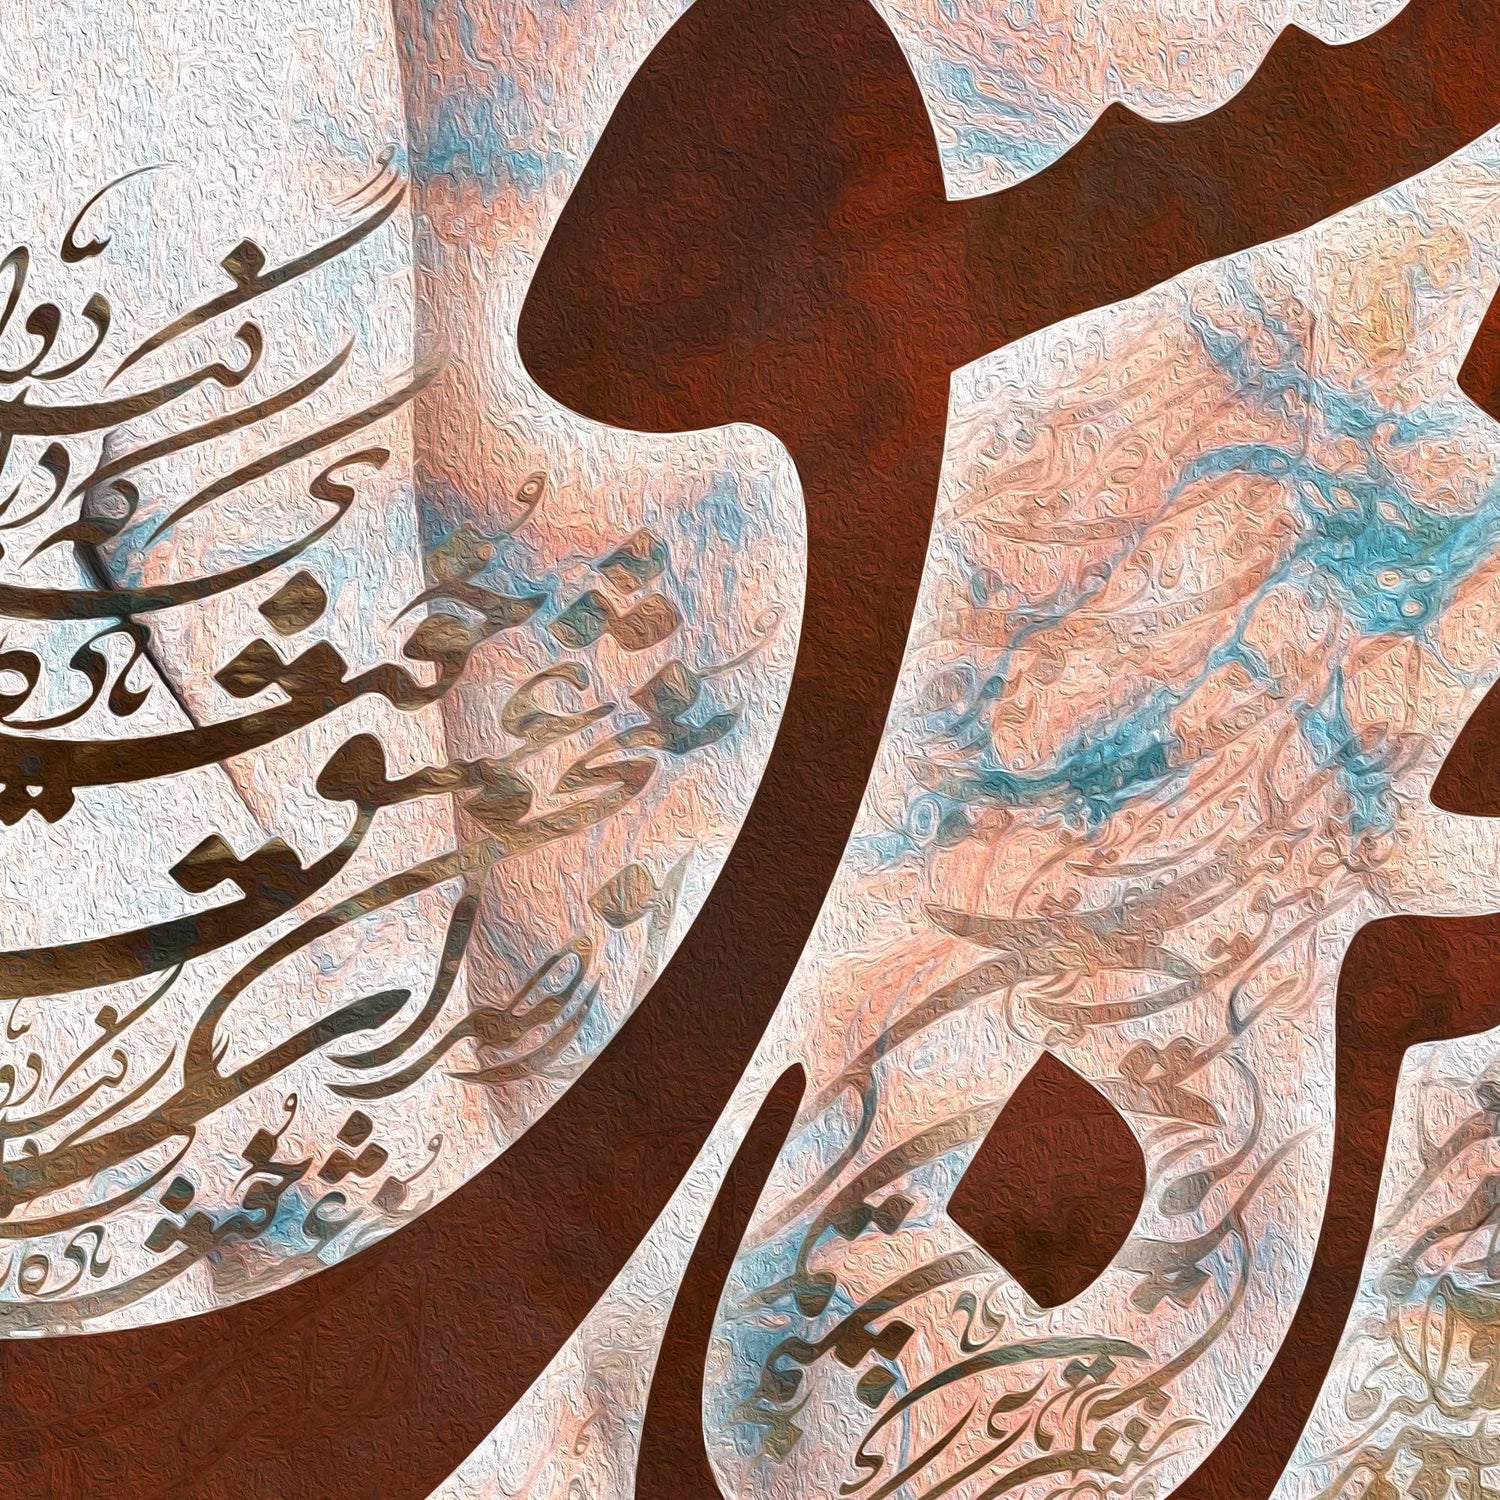 Sokhan-e Eshgh | Persian Wall Art | Persian Home Wall Decor - ORIAVI Persian Art, persian artwork for sale, persian calligraphy, persian calligraphy wall art, persian mix media wall art, persian painting, persian wall art